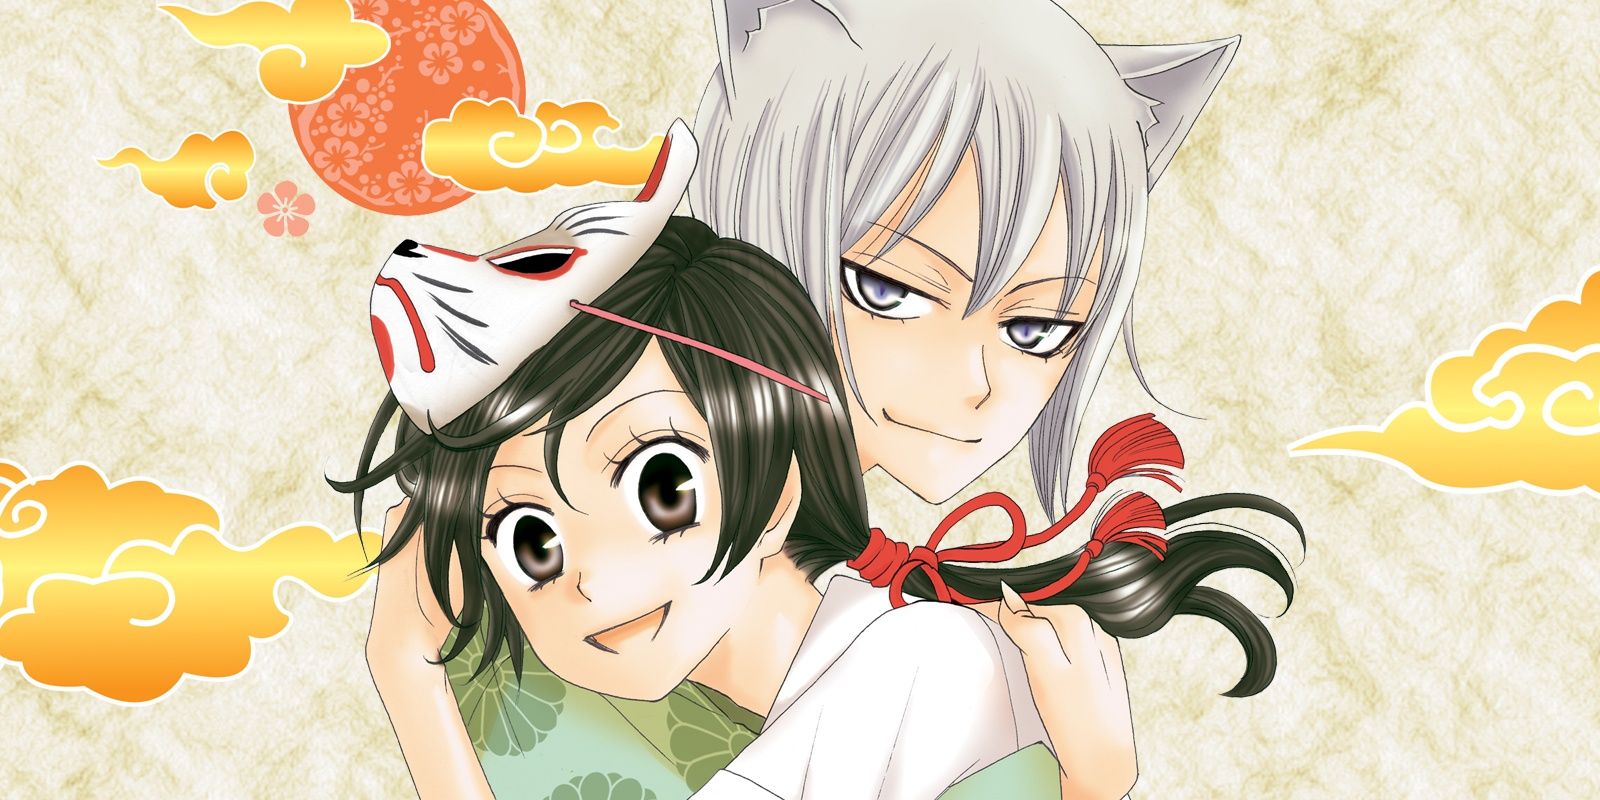 Nanami and Tomoe smiling and embracing in the Kamisama Kiss manga